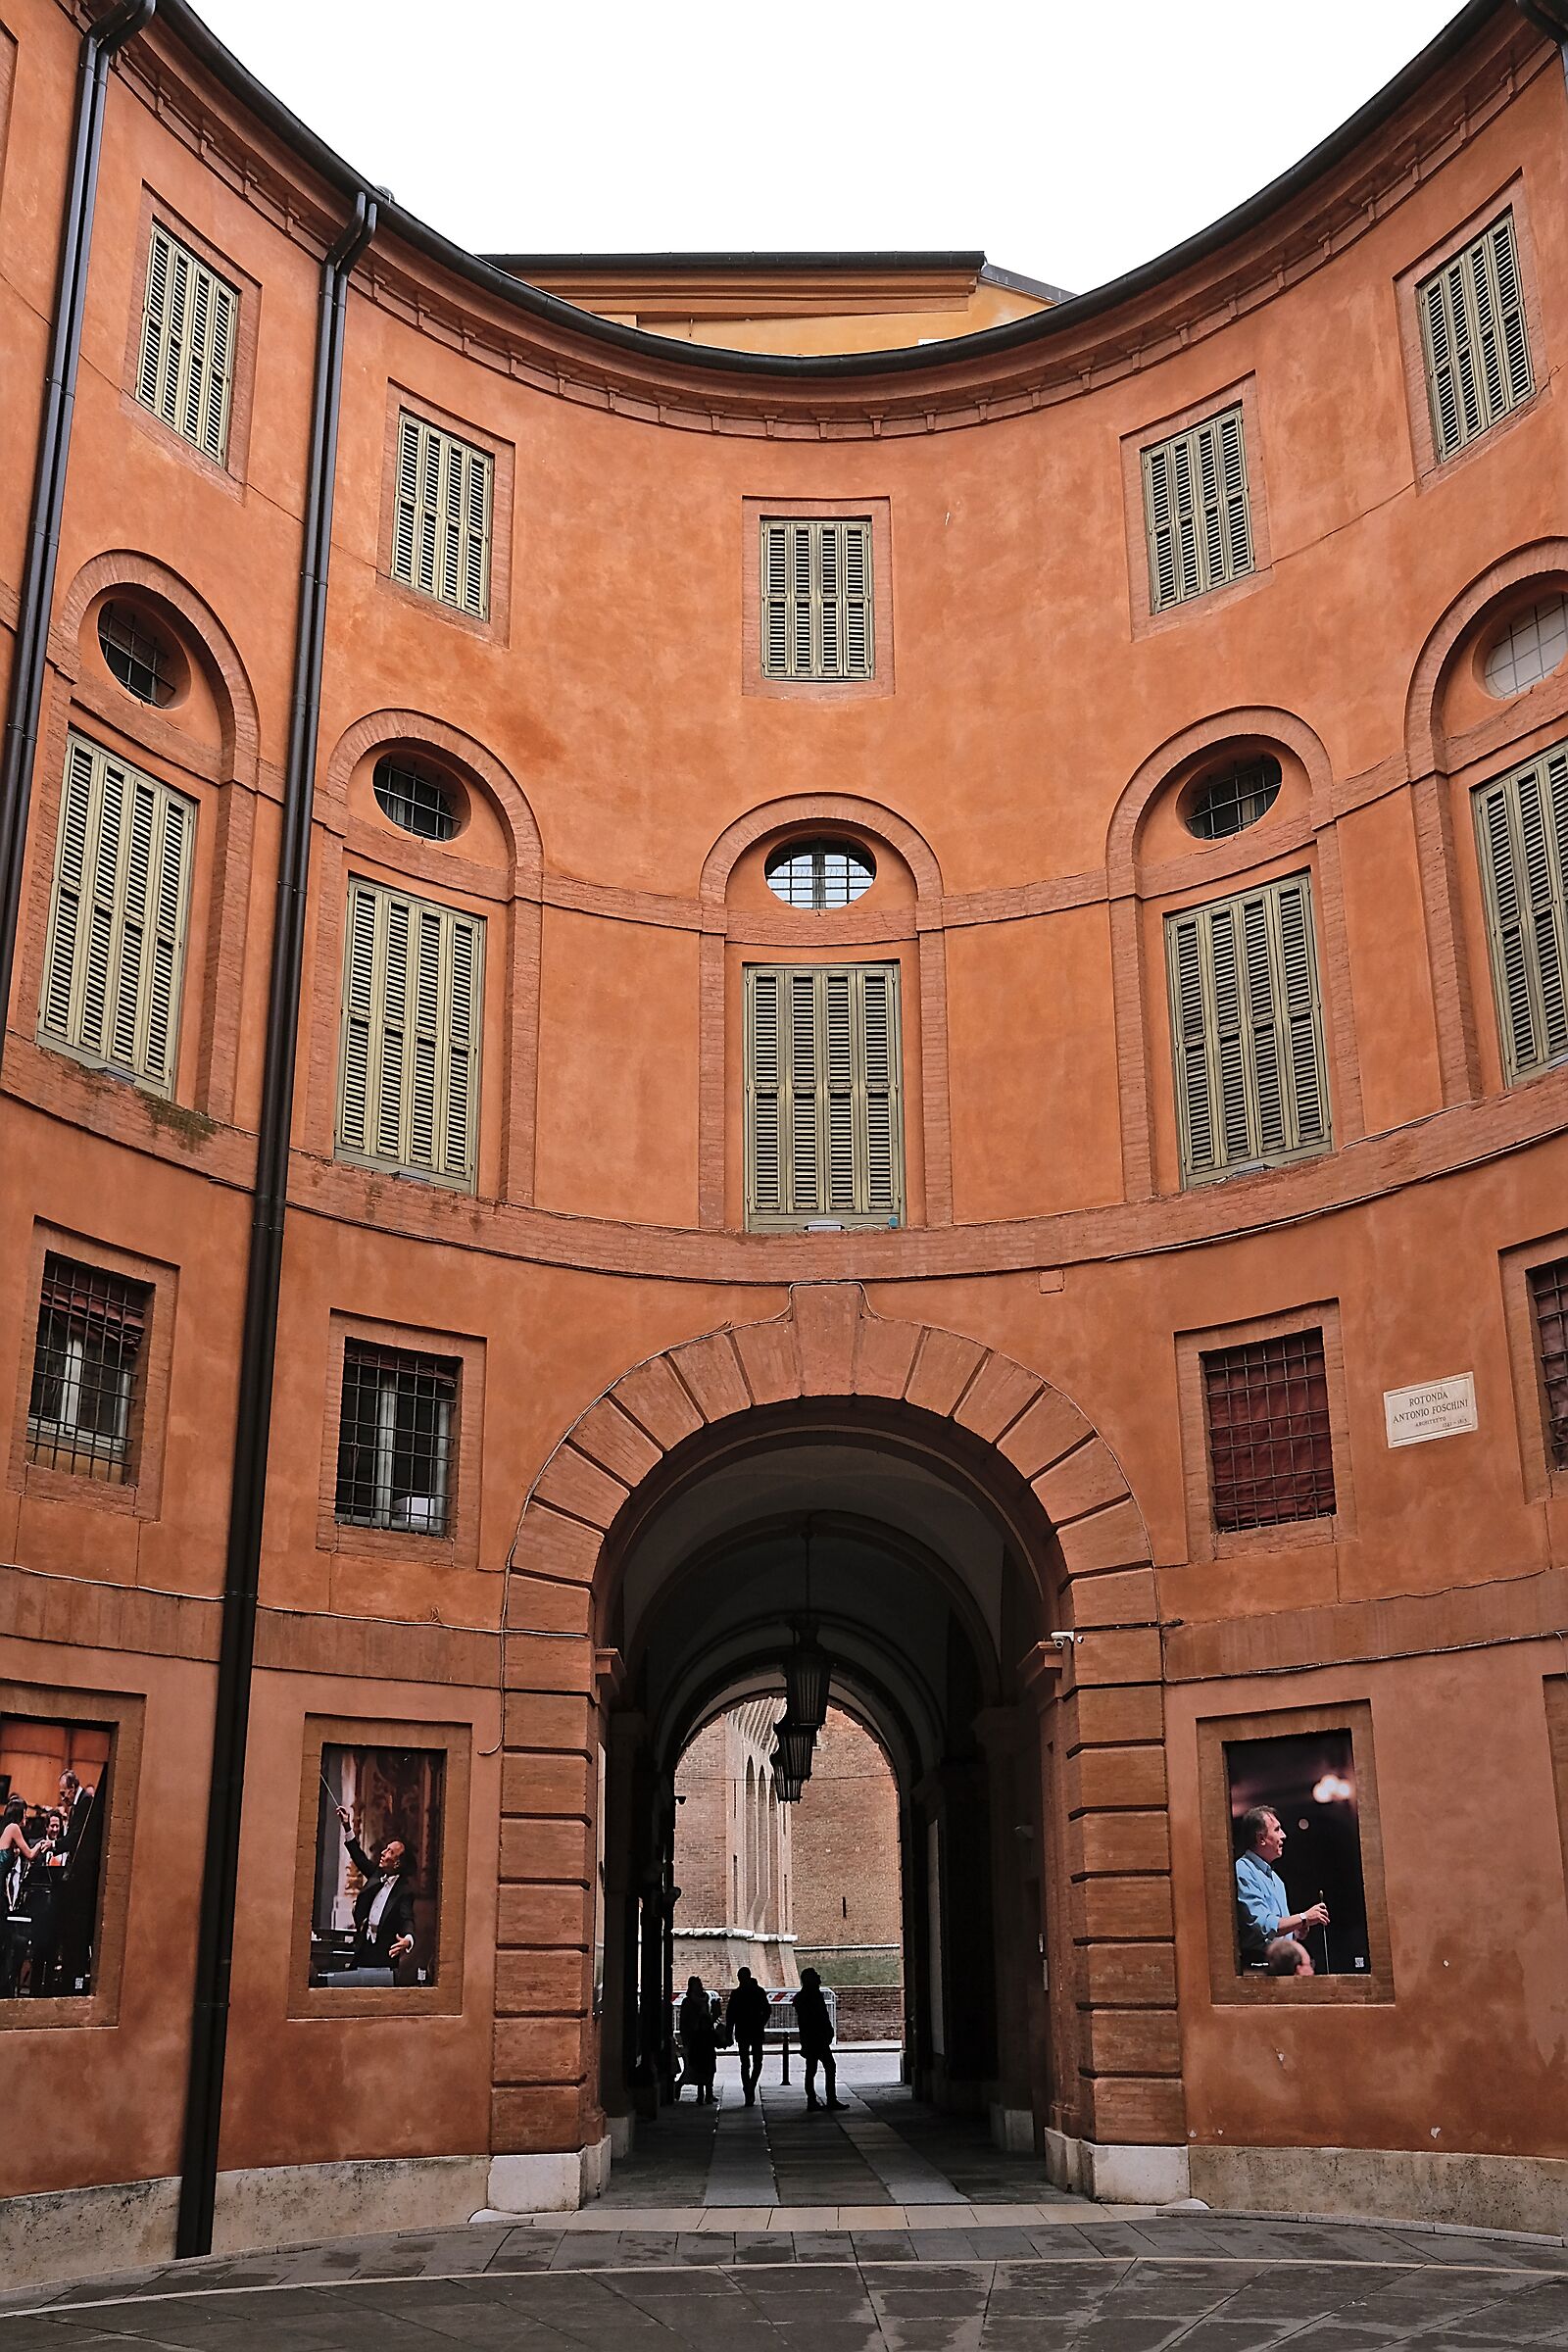 The Rotunda of Ferrara ...